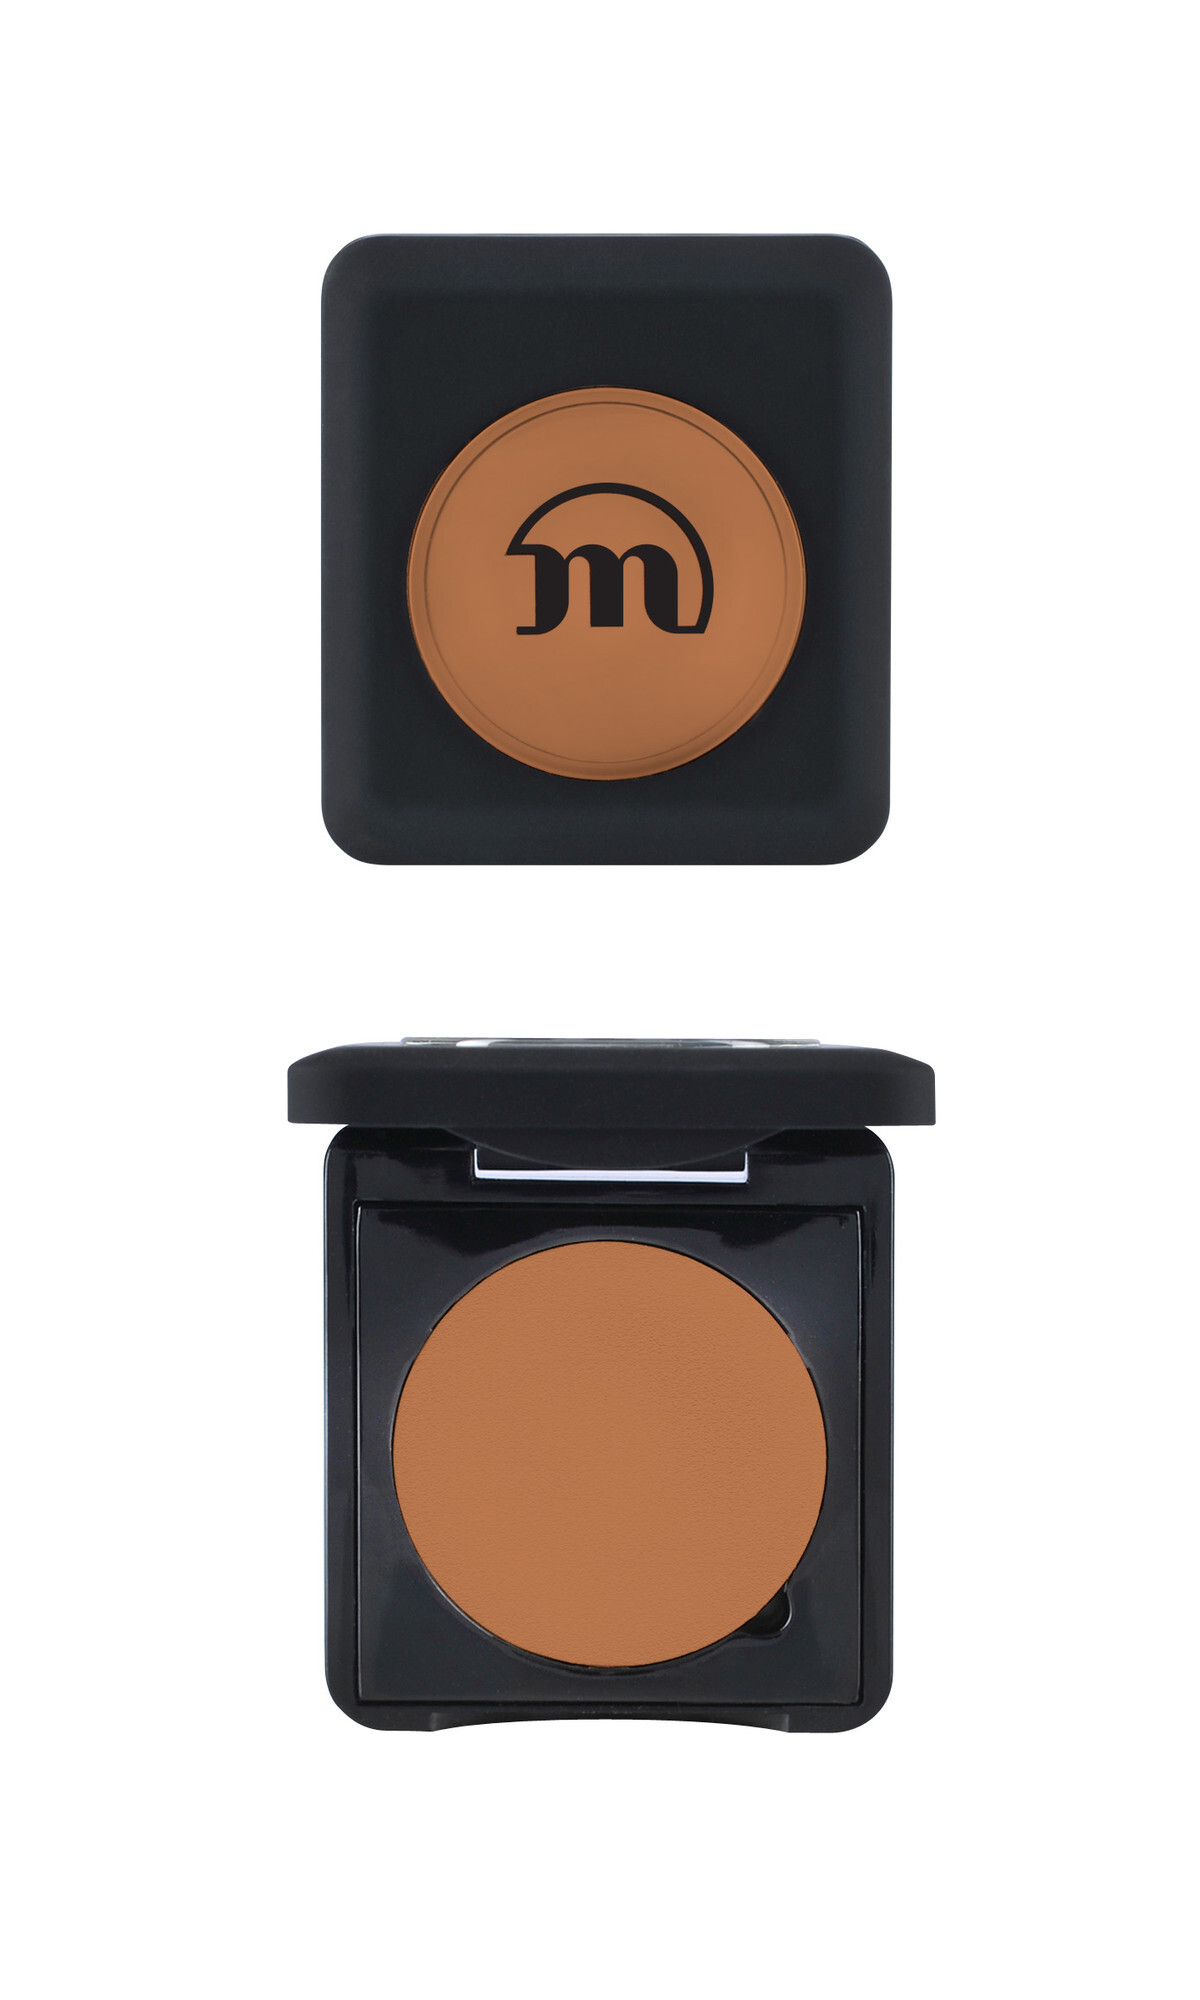 Make-up Studio Eyeshadow in Box Type B 31 B 31